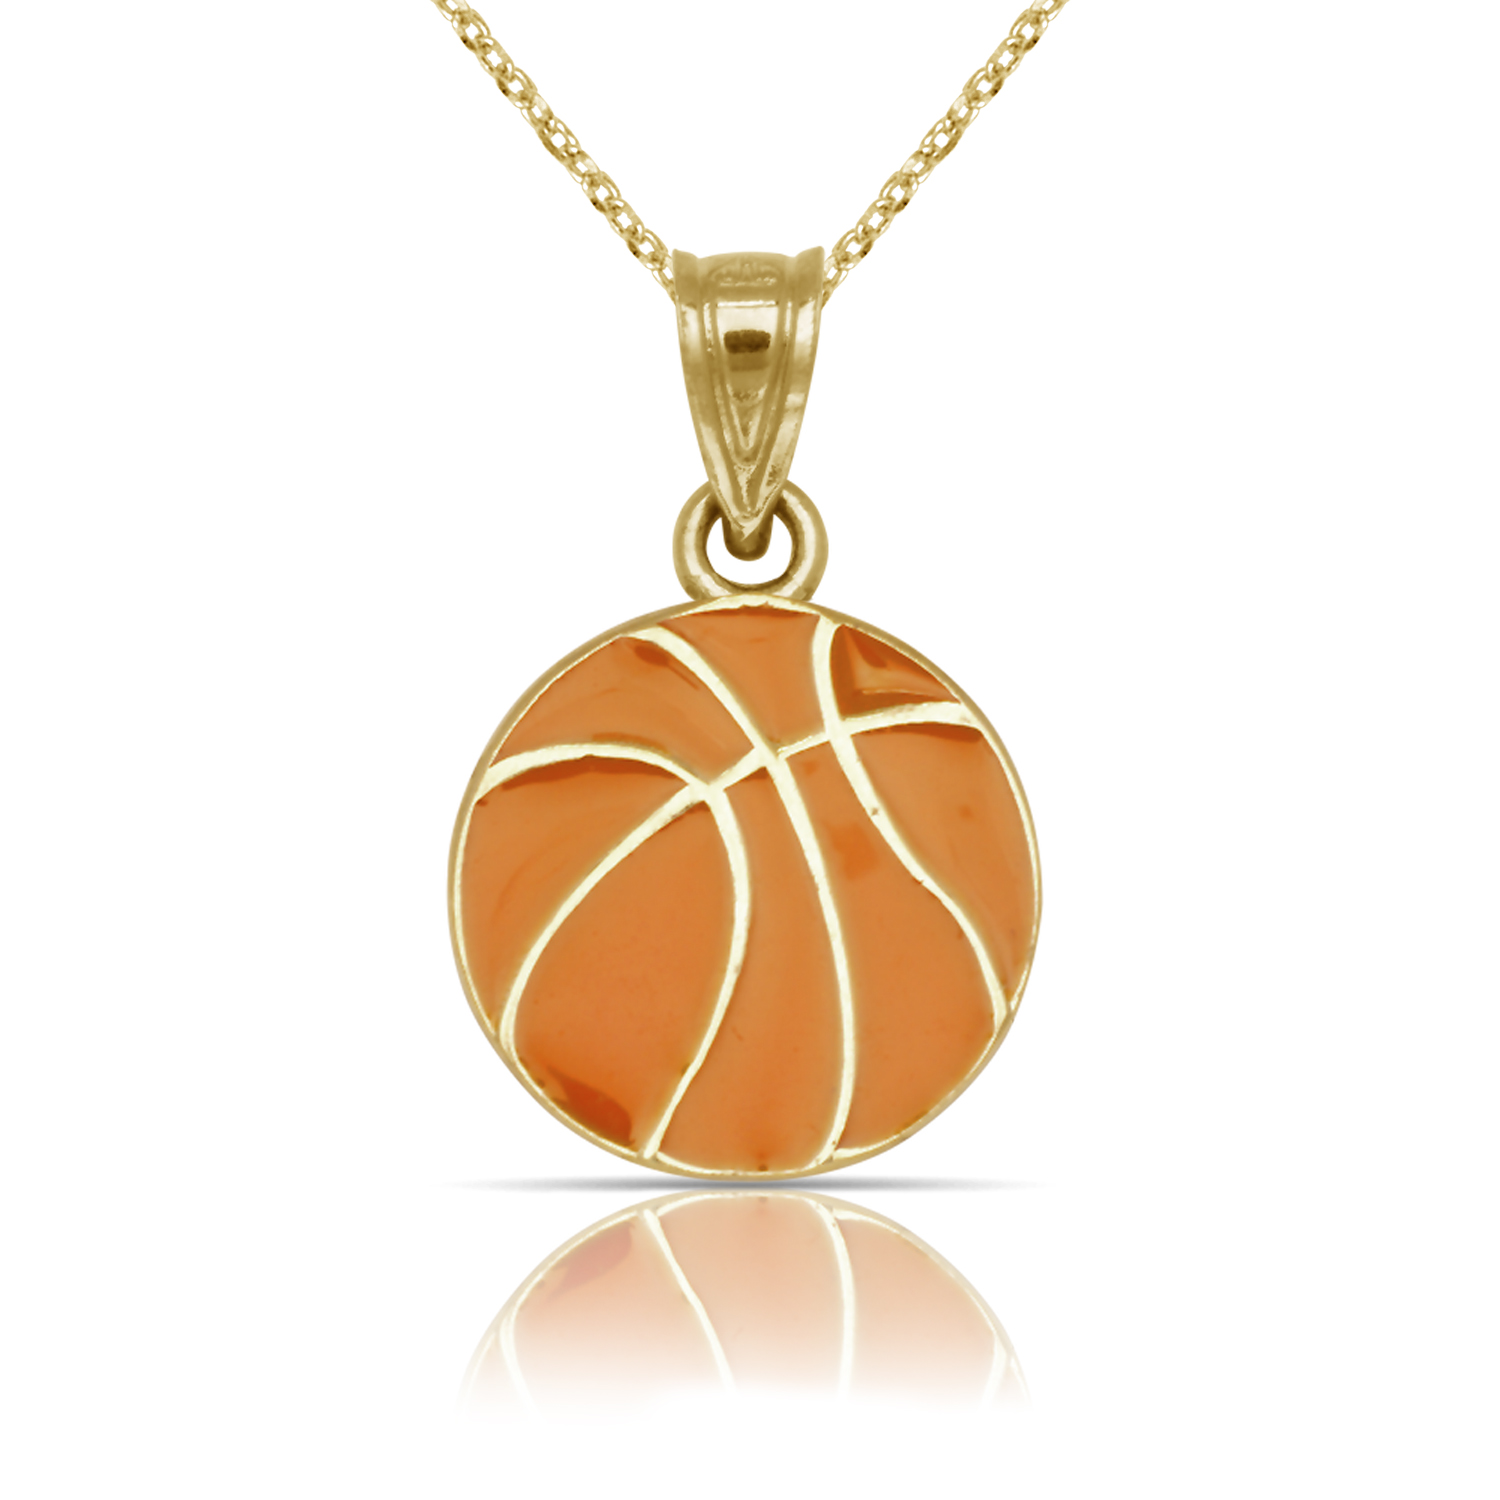 
14k Yellow Gold Enamel Basketball Pendant
